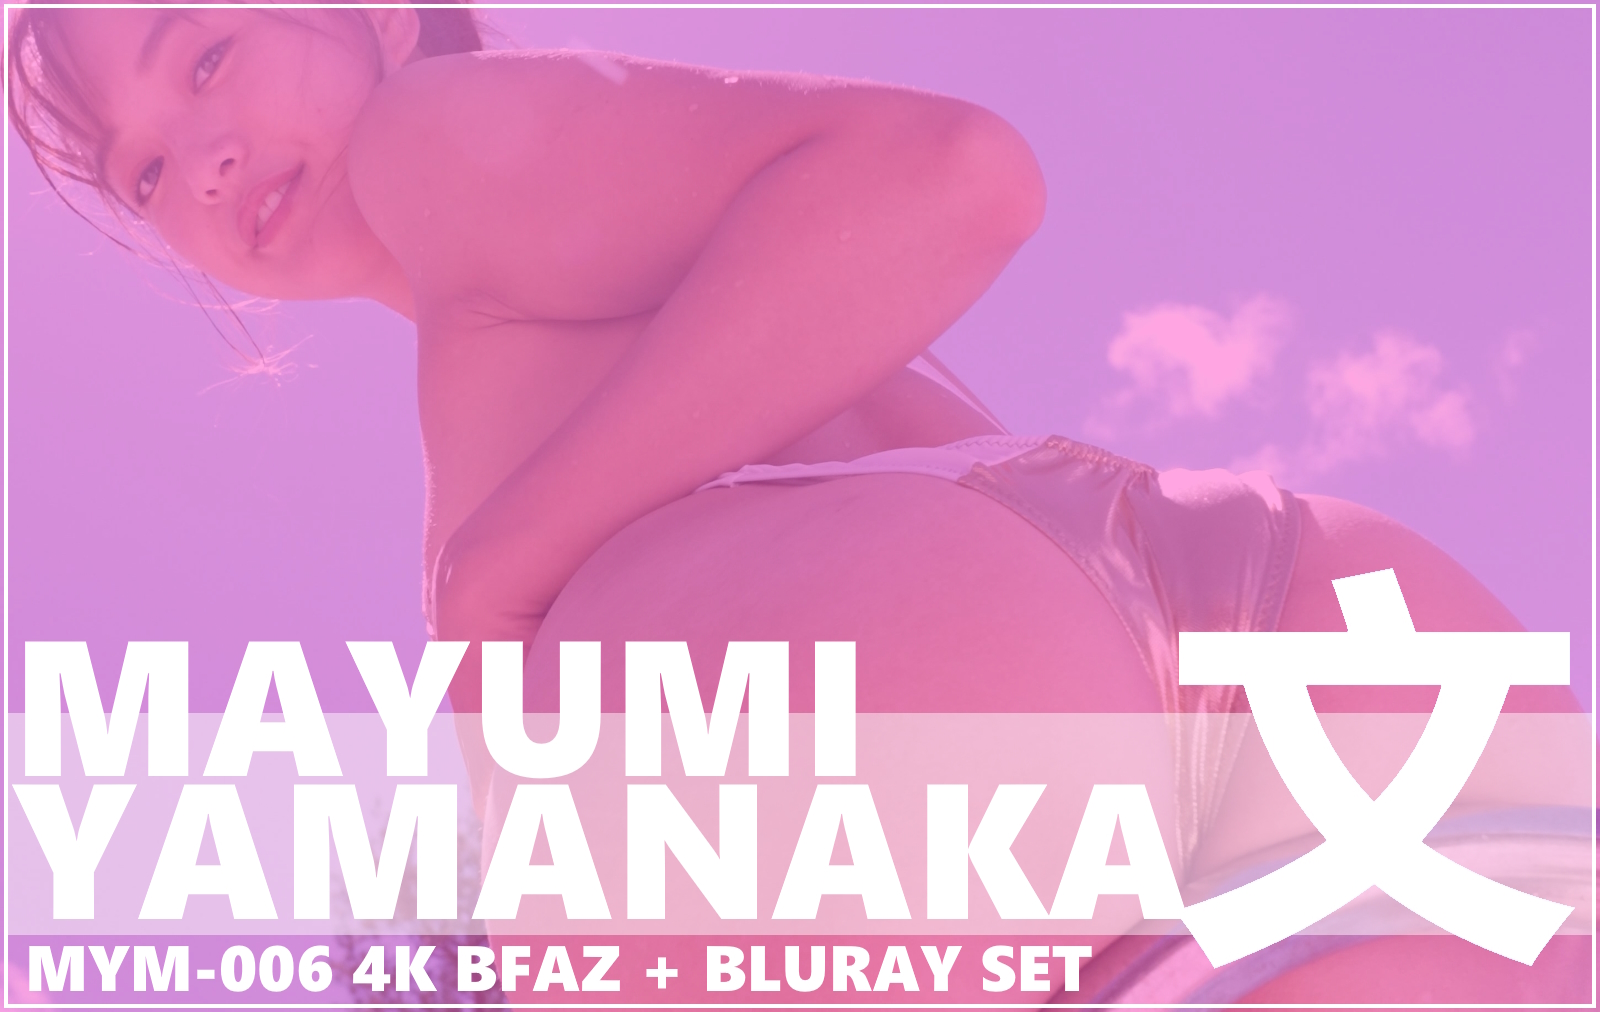 MYM-006 Mayumi Yamanaka BMAY Bluray + 4K BFAZ Set